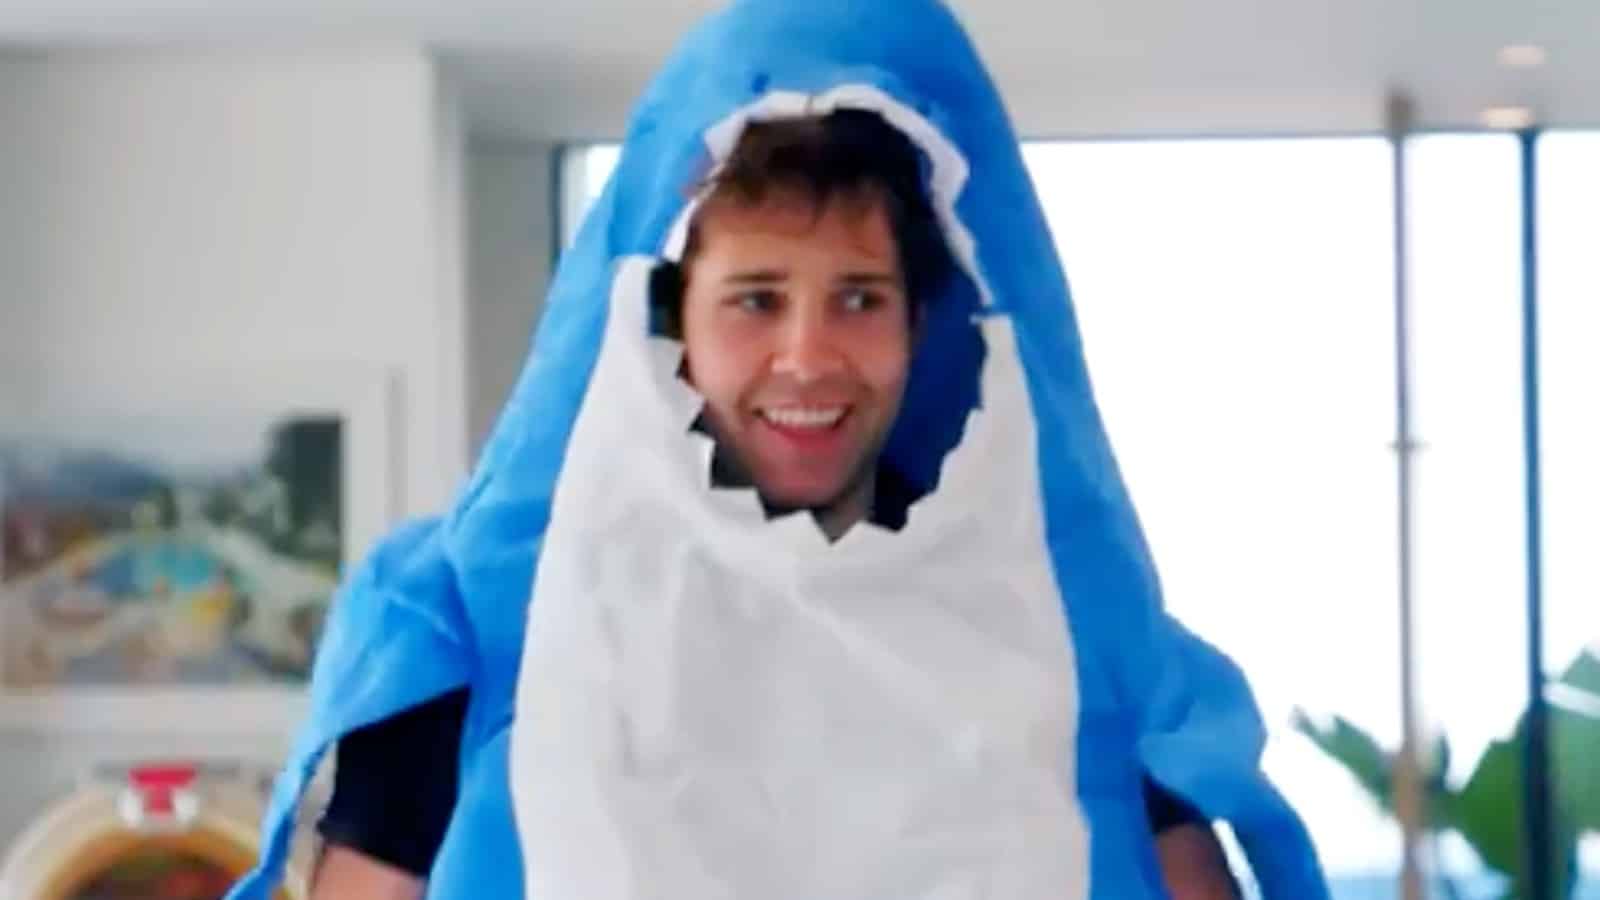 David Dobrik in a shark costume